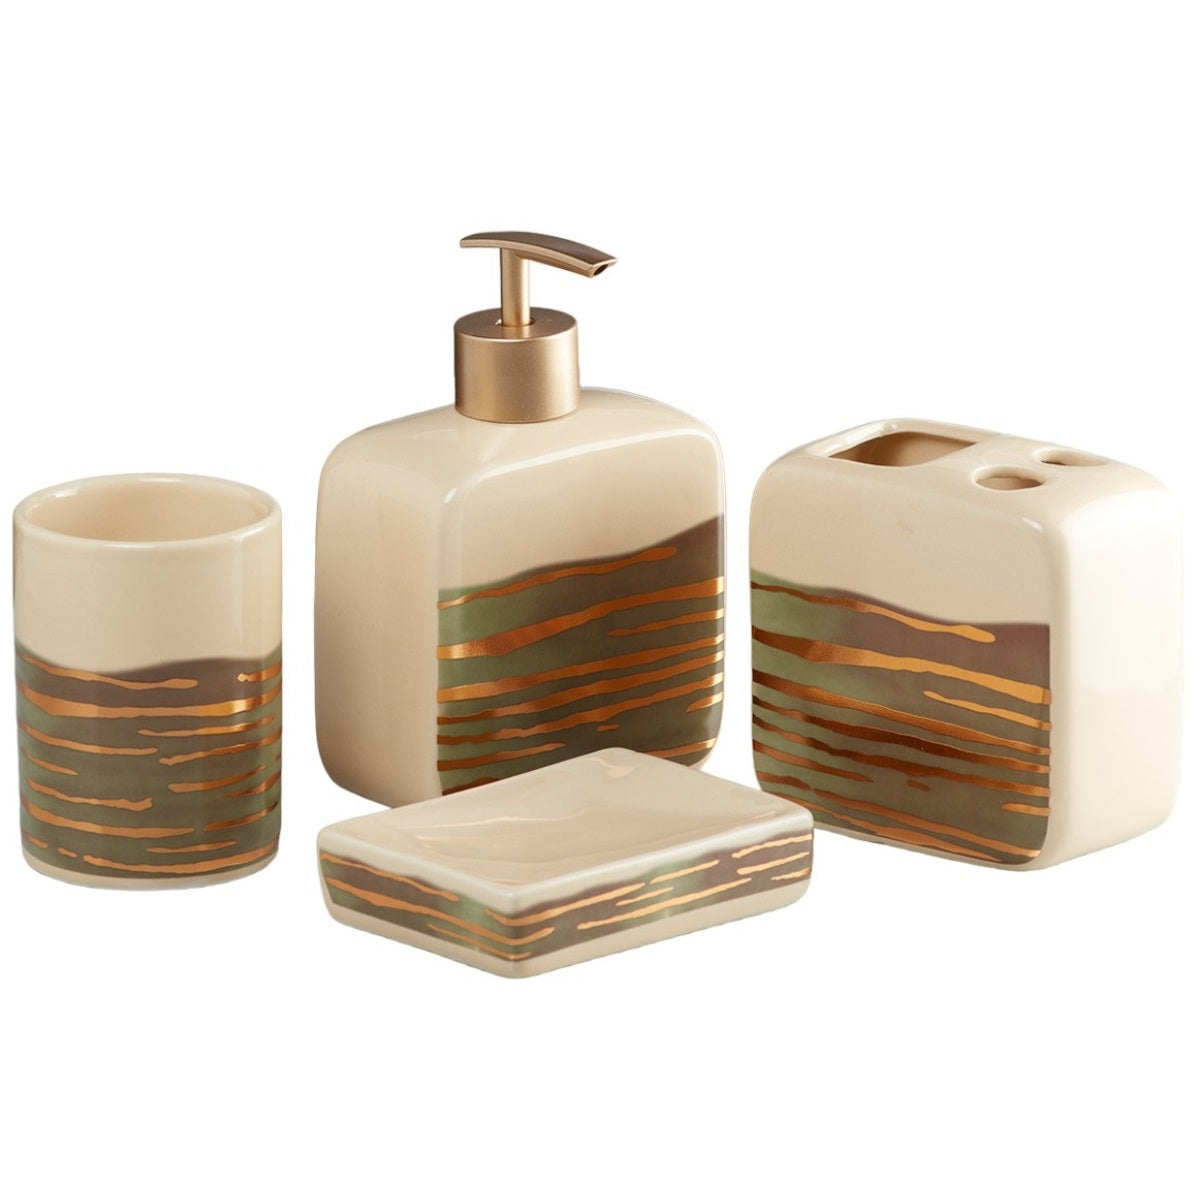 Ceramic Bathroom Accessories Set of 4 Bath Set with Soap Dispenser (10075)